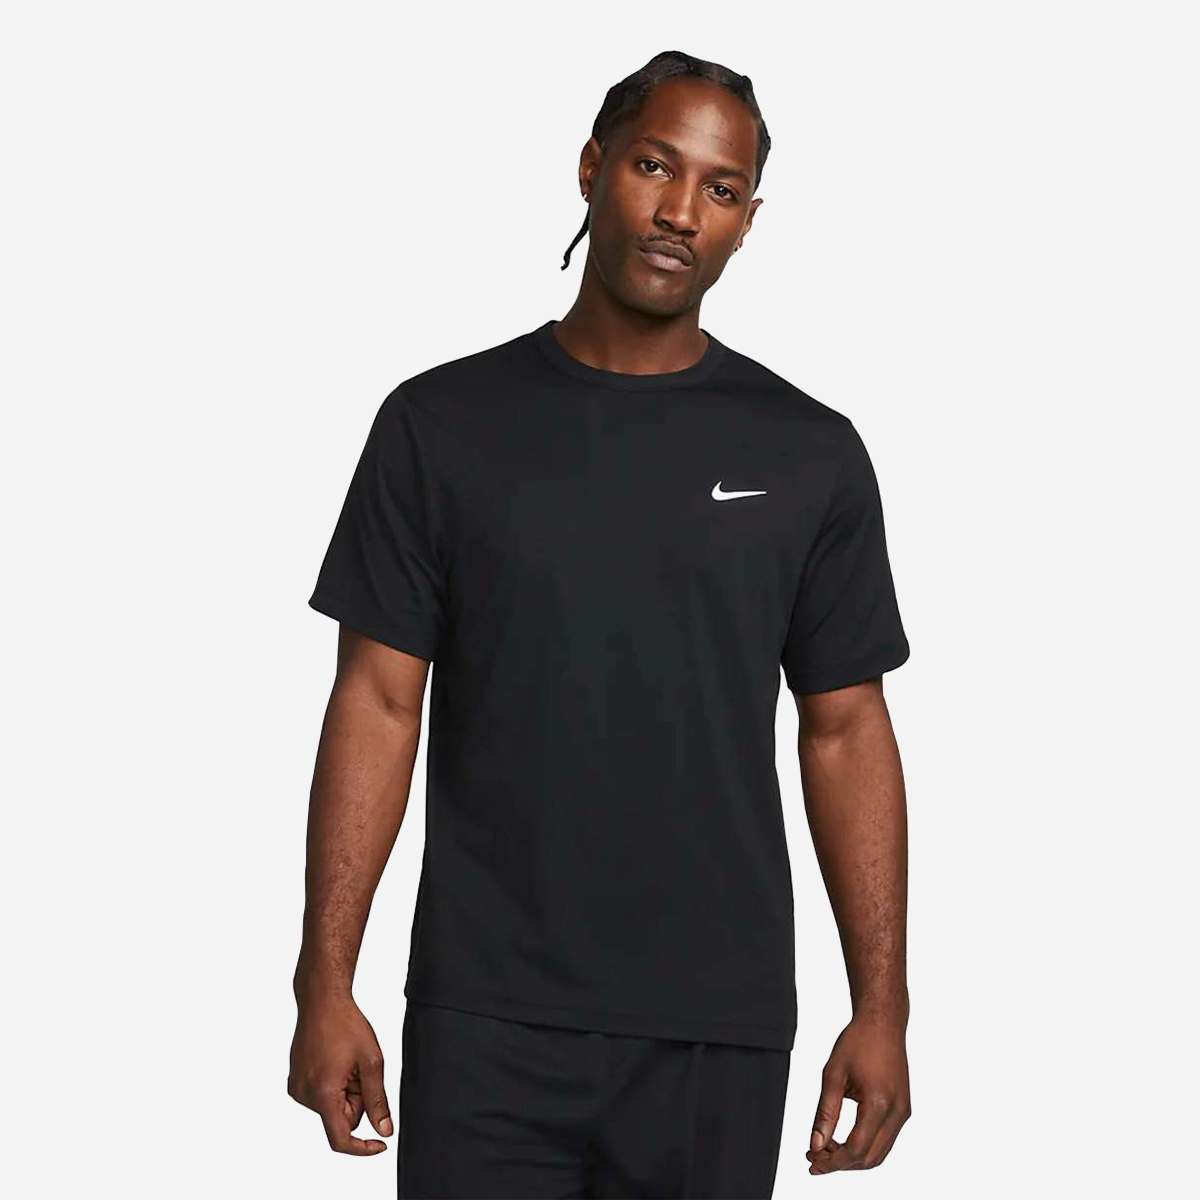 AN298380 Nike Dri-fit Uv Hyverse Men's Short